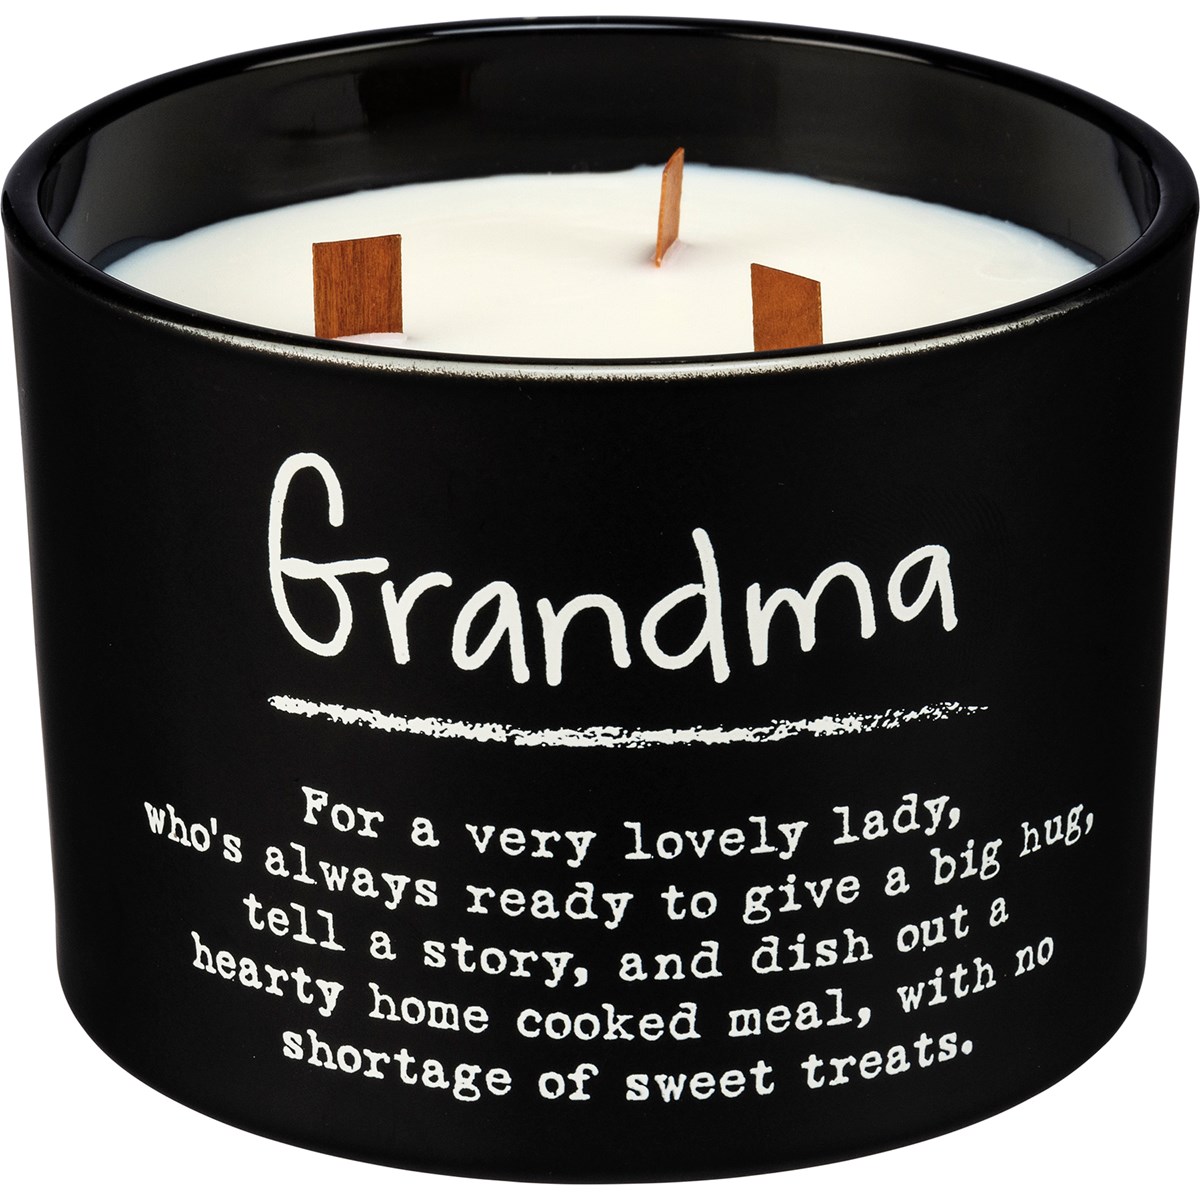 Grandma Jar Candle - Soy Wax, Glass, Wood